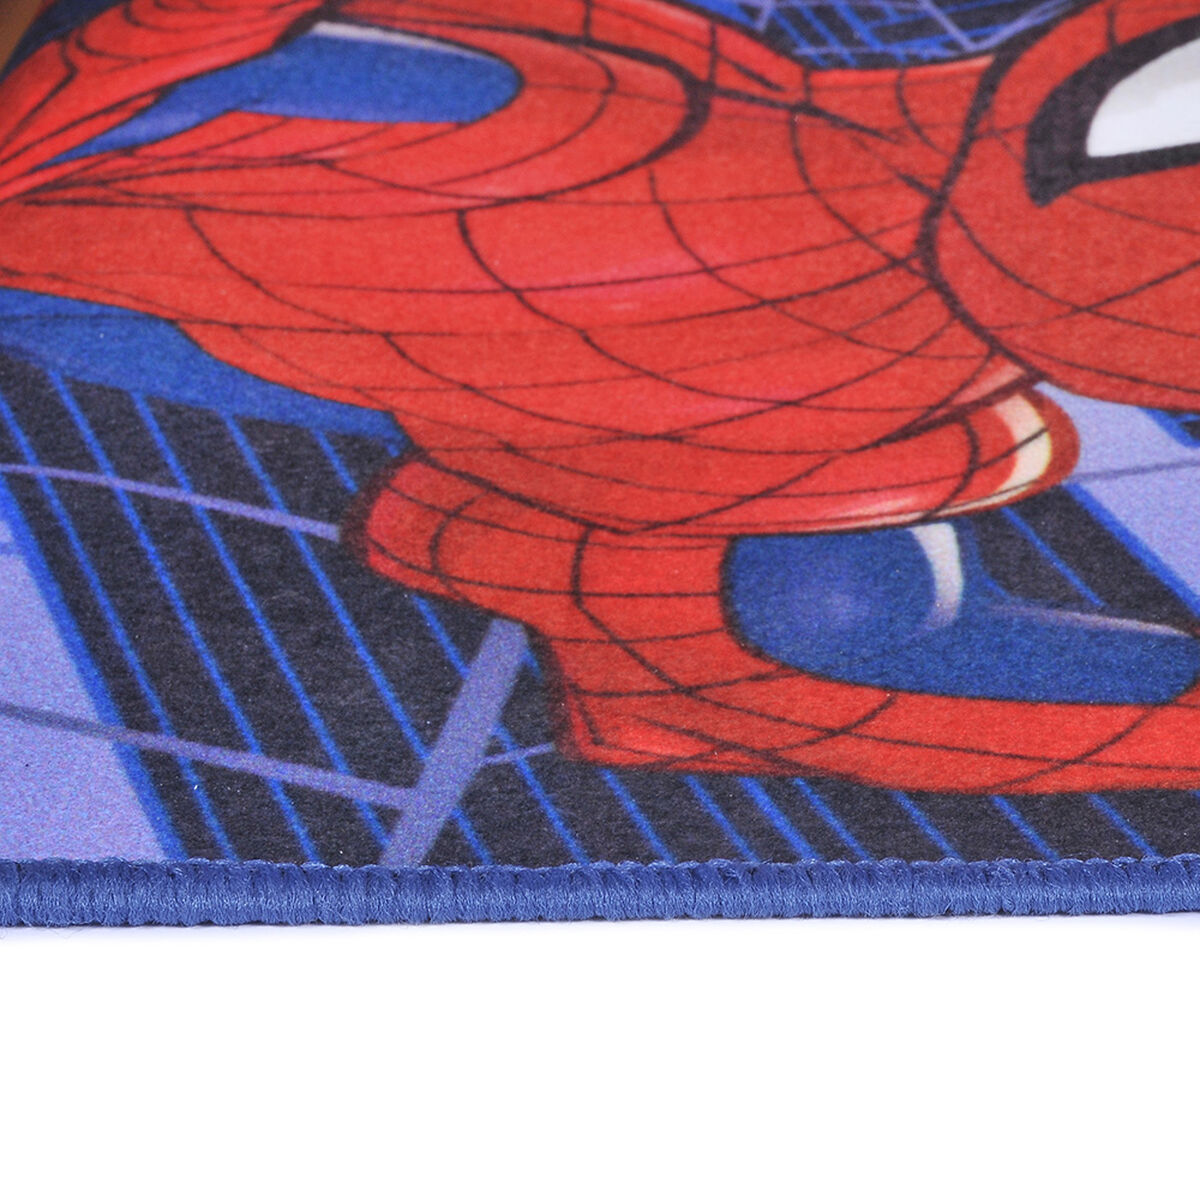 Bajada de Cama Spiderman Wall 80 x 120 cm